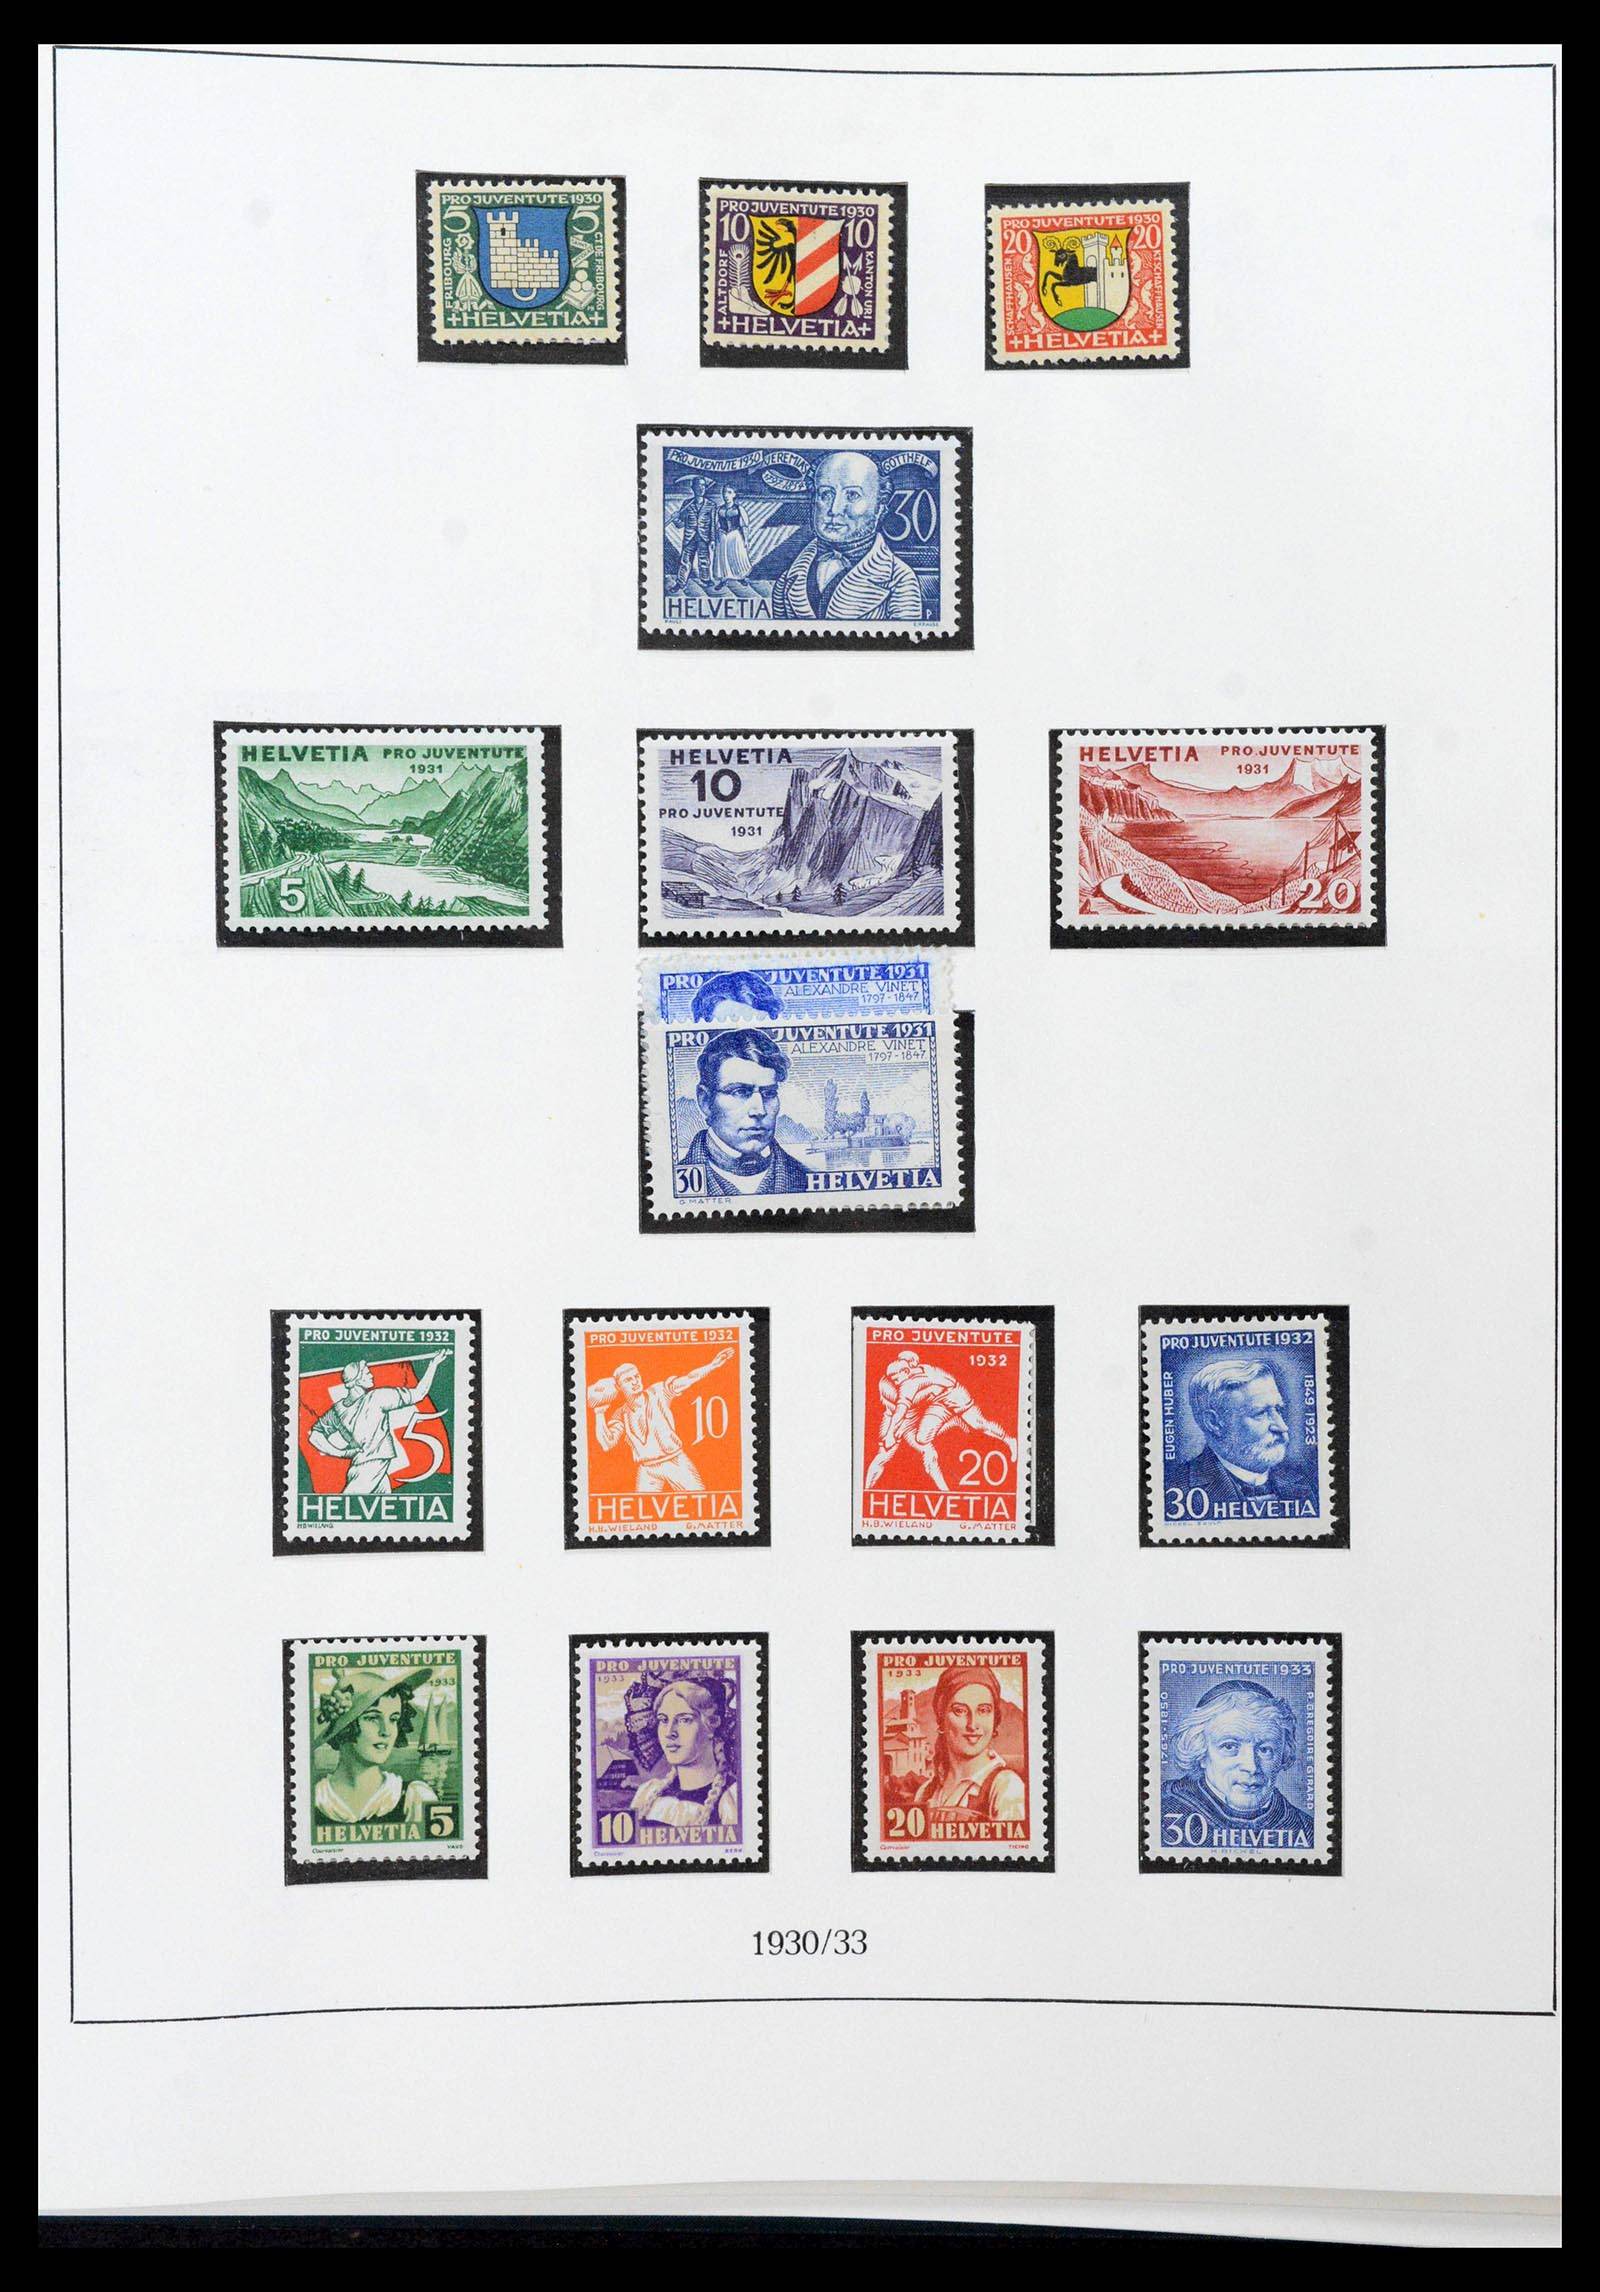 39235 0021 - Stamp collection 39235 Switzerland 1843-1960.